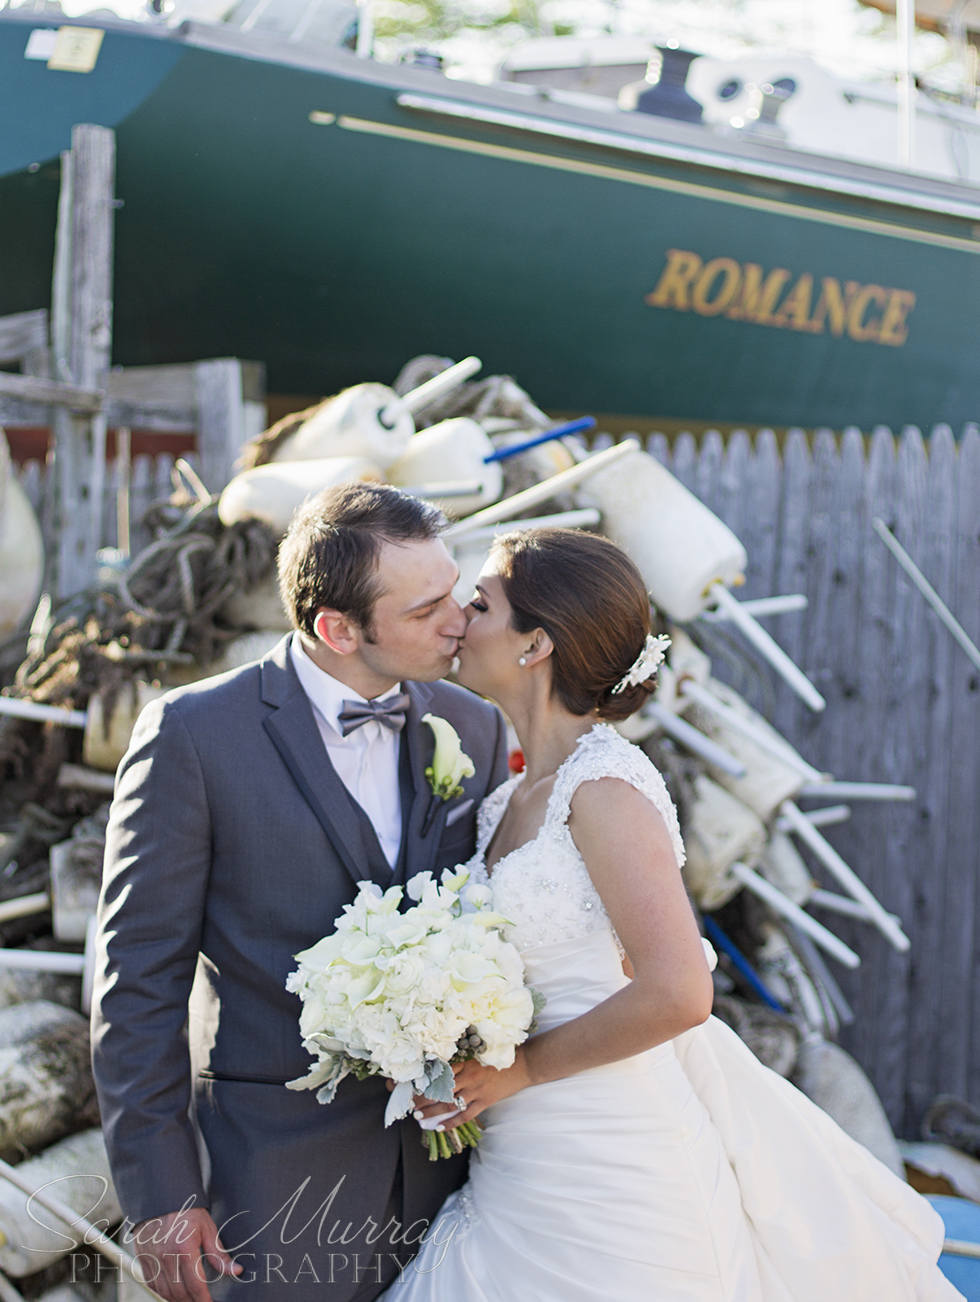 Bristol Yacht Club Wedding in Bristol, Rhode Island - Sarah Murray Photography